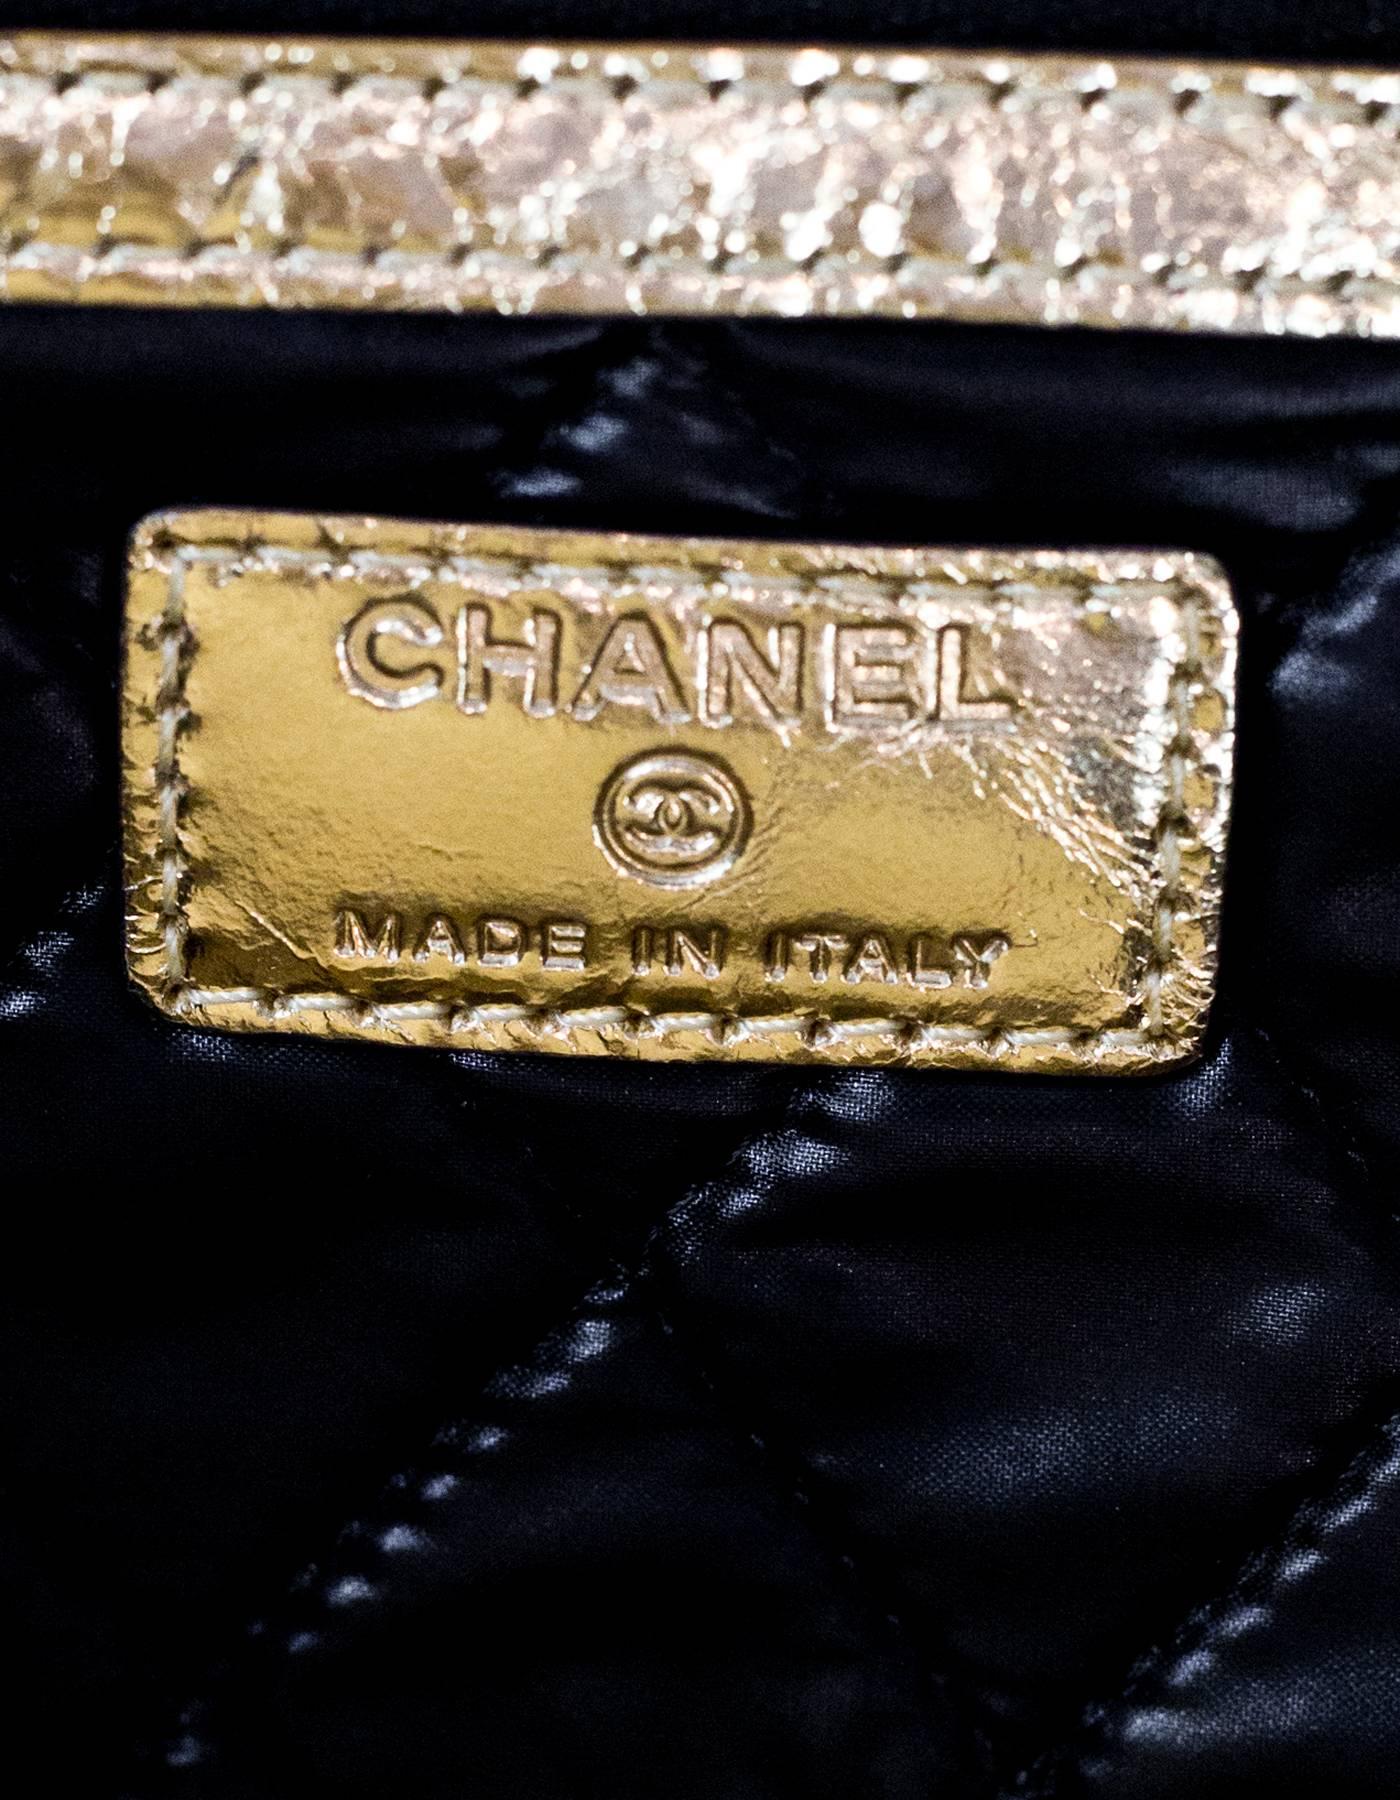 Chanel 2015 Gold Crinkled Leather Large Feminist Mais Feminine Clutch Bag 3